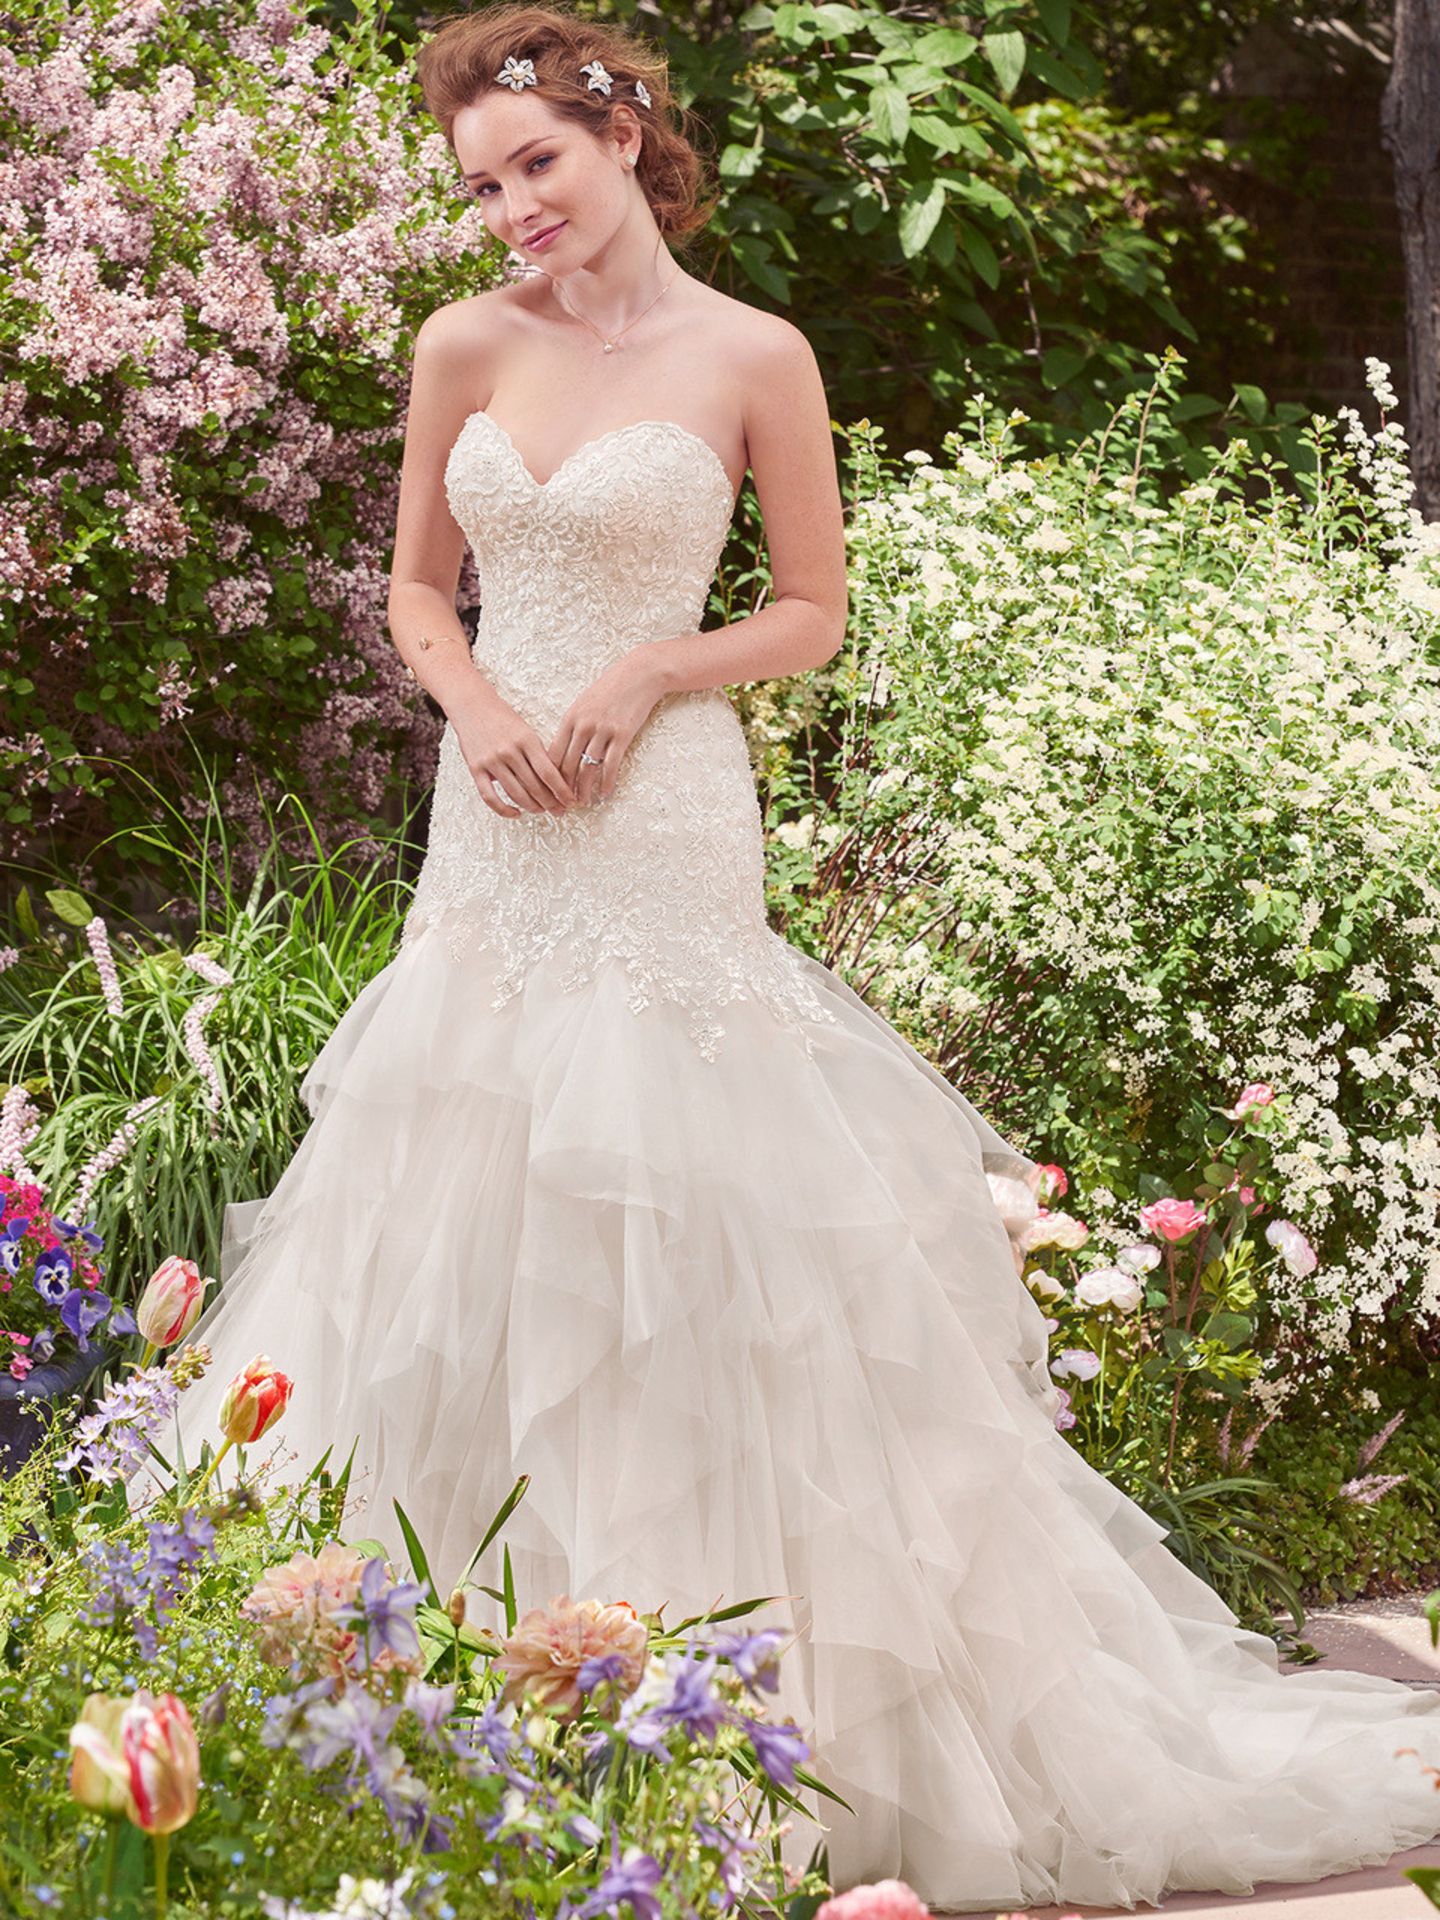 1 x REBECCA INGRAM 'Millicent' Strapless Mermaid Designer Wedding Dress RRP £1,200 UK12